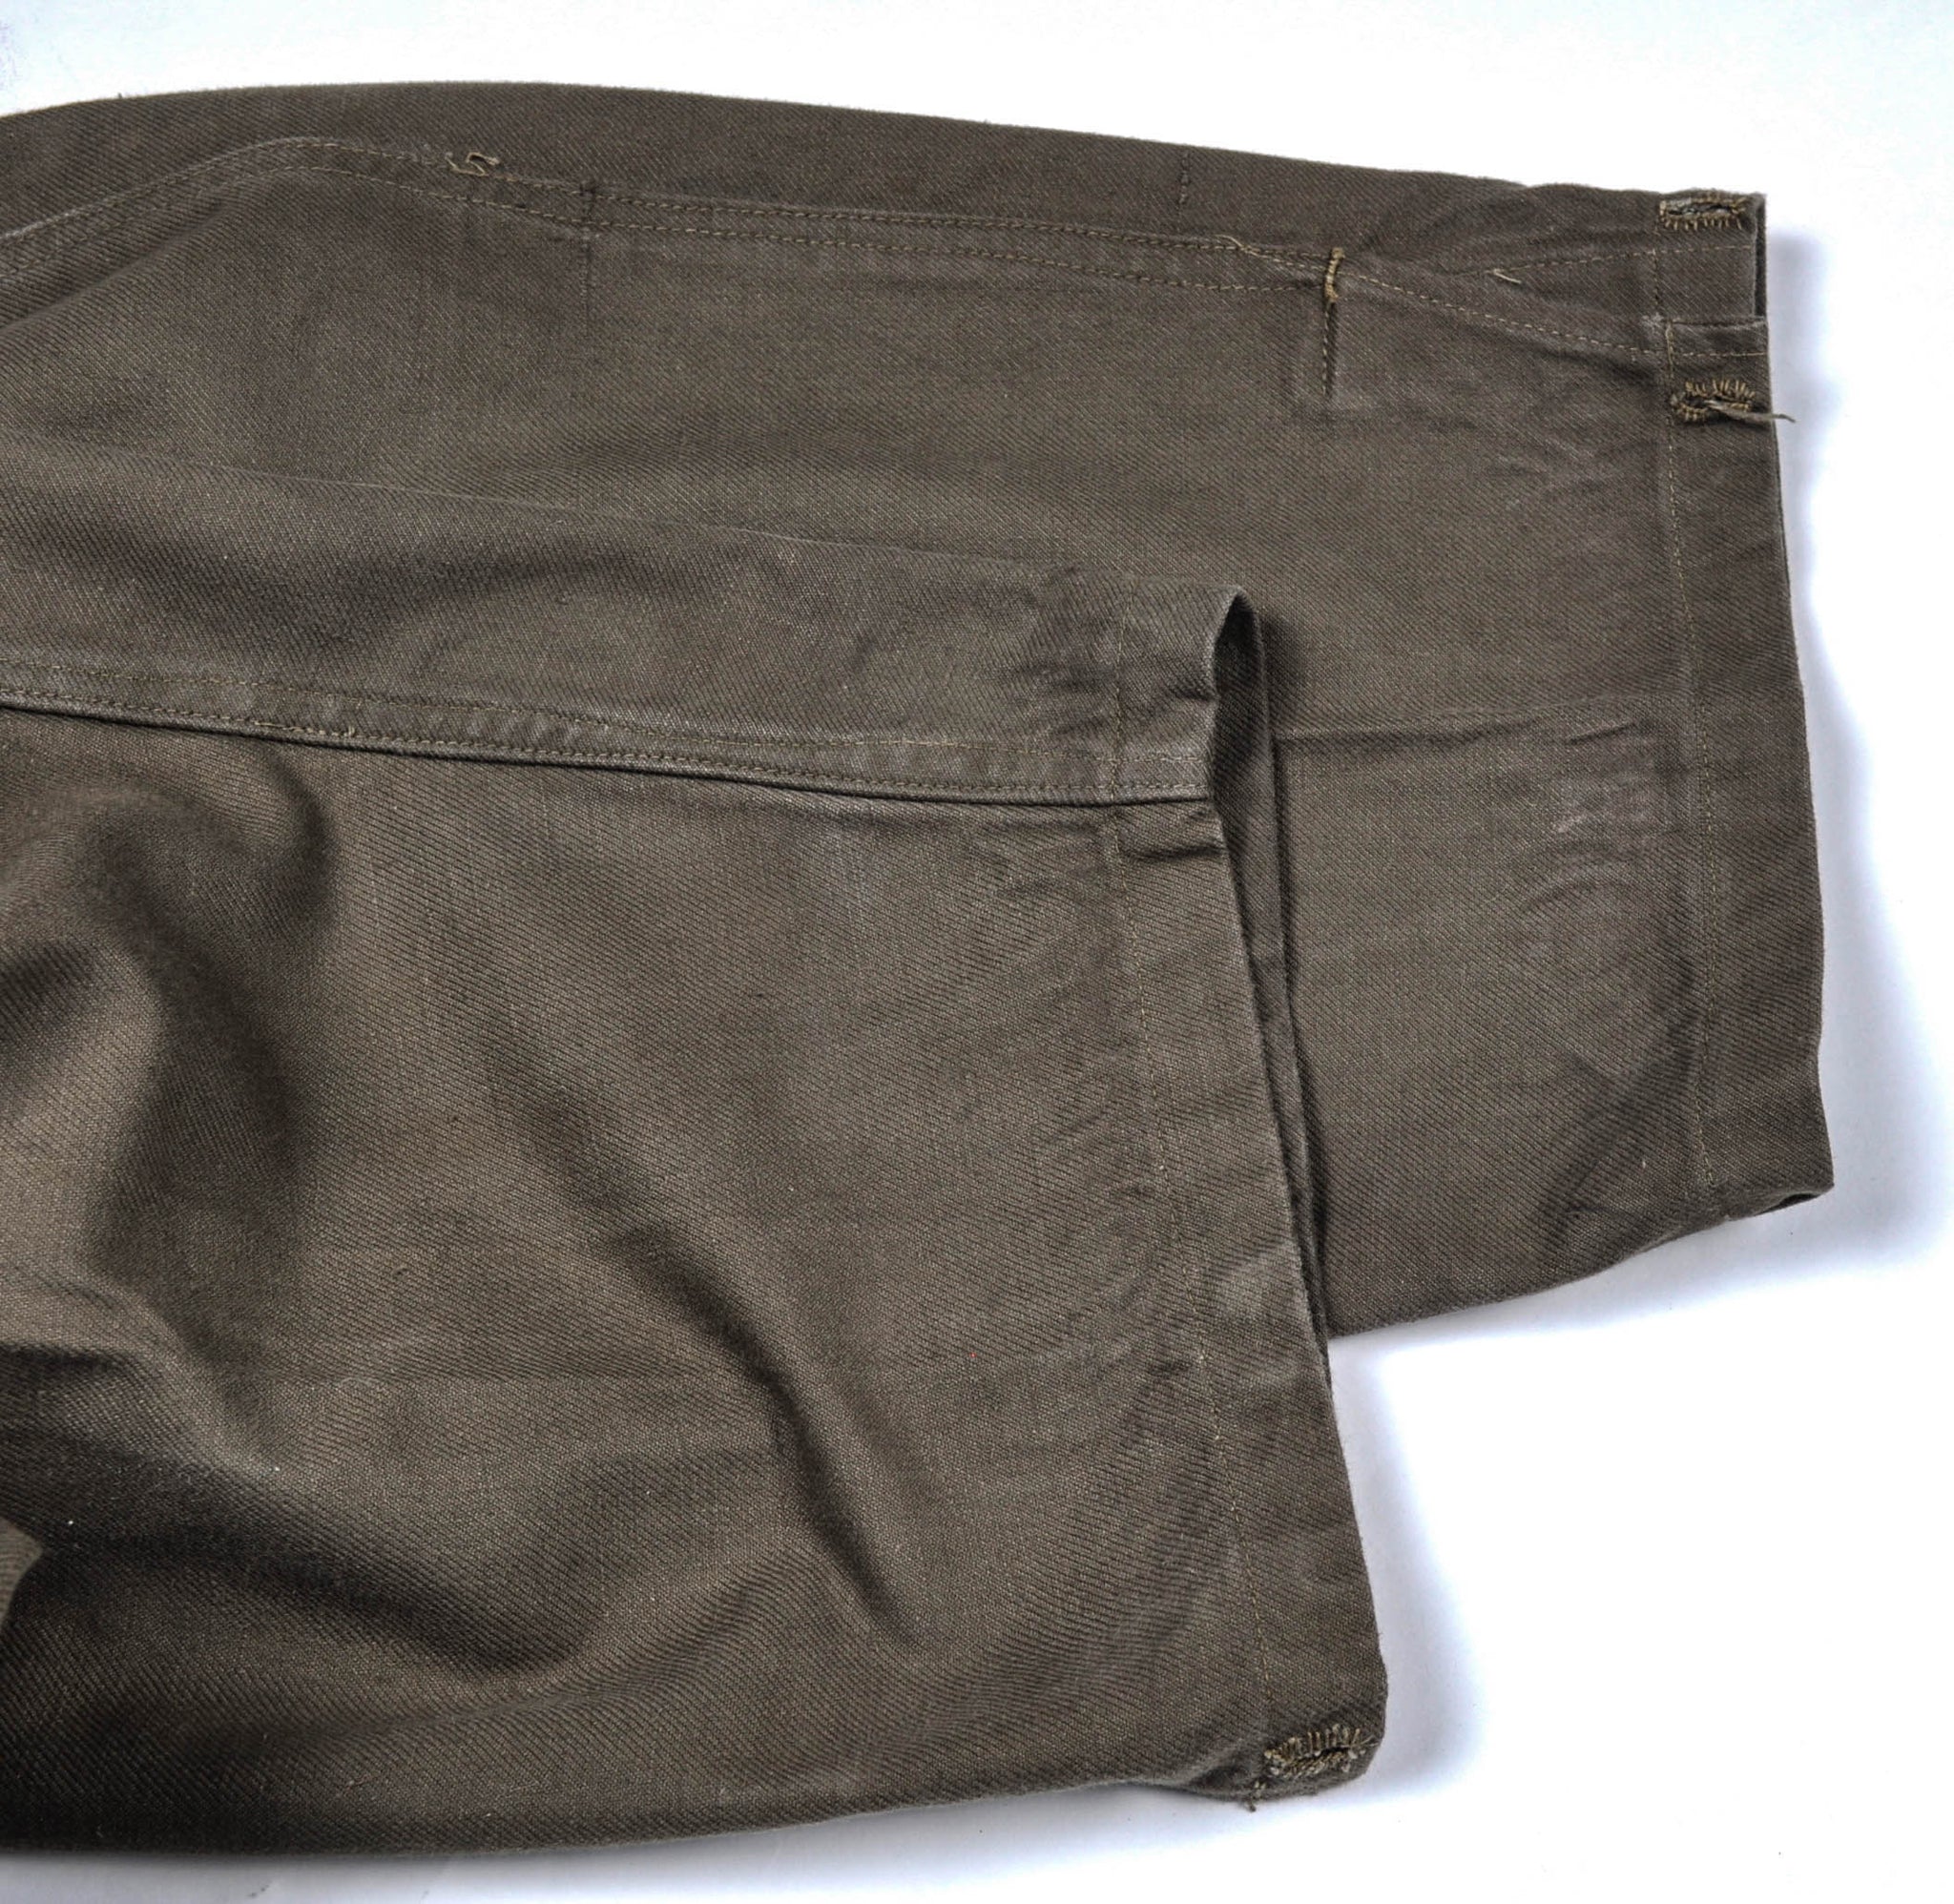 Pantalon TAP 47 daté 1949